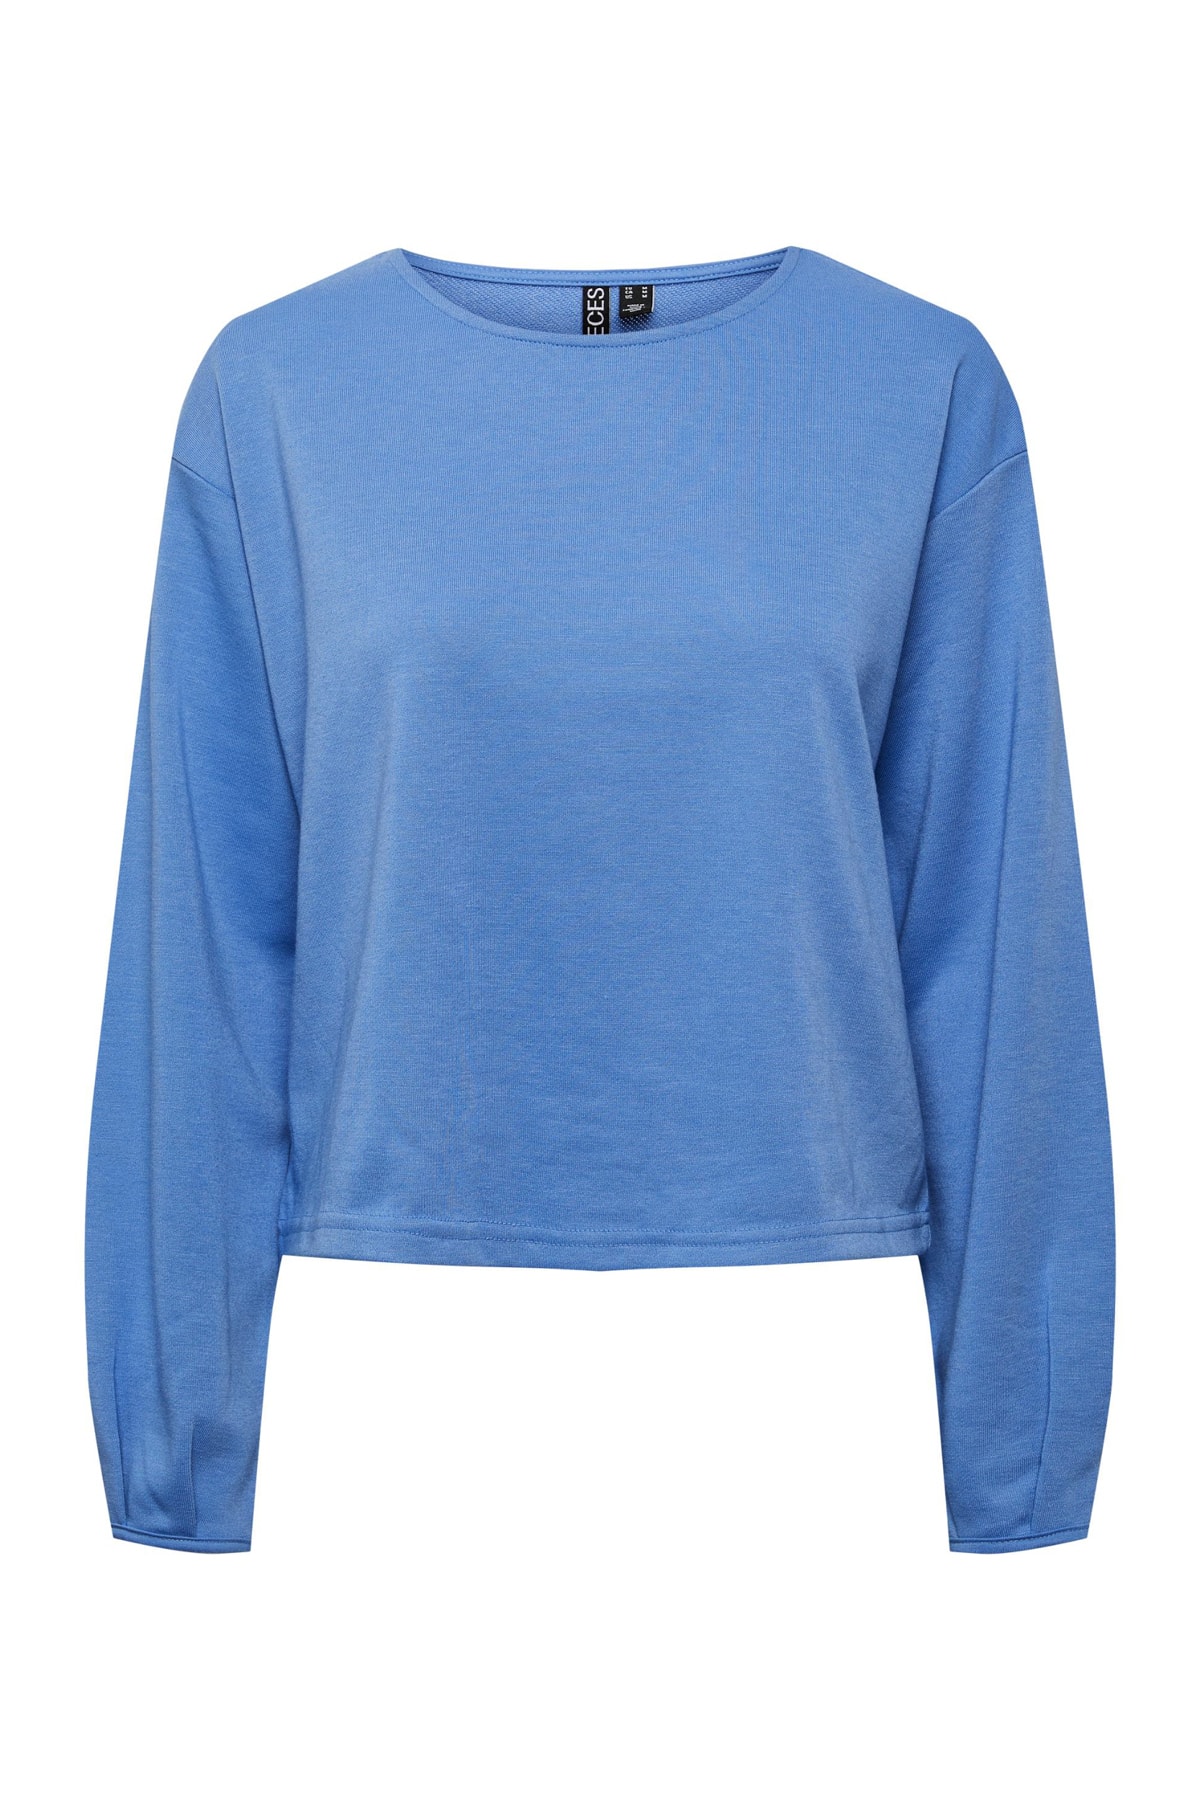 PIECES Sweatshirt Blau Regular Fit